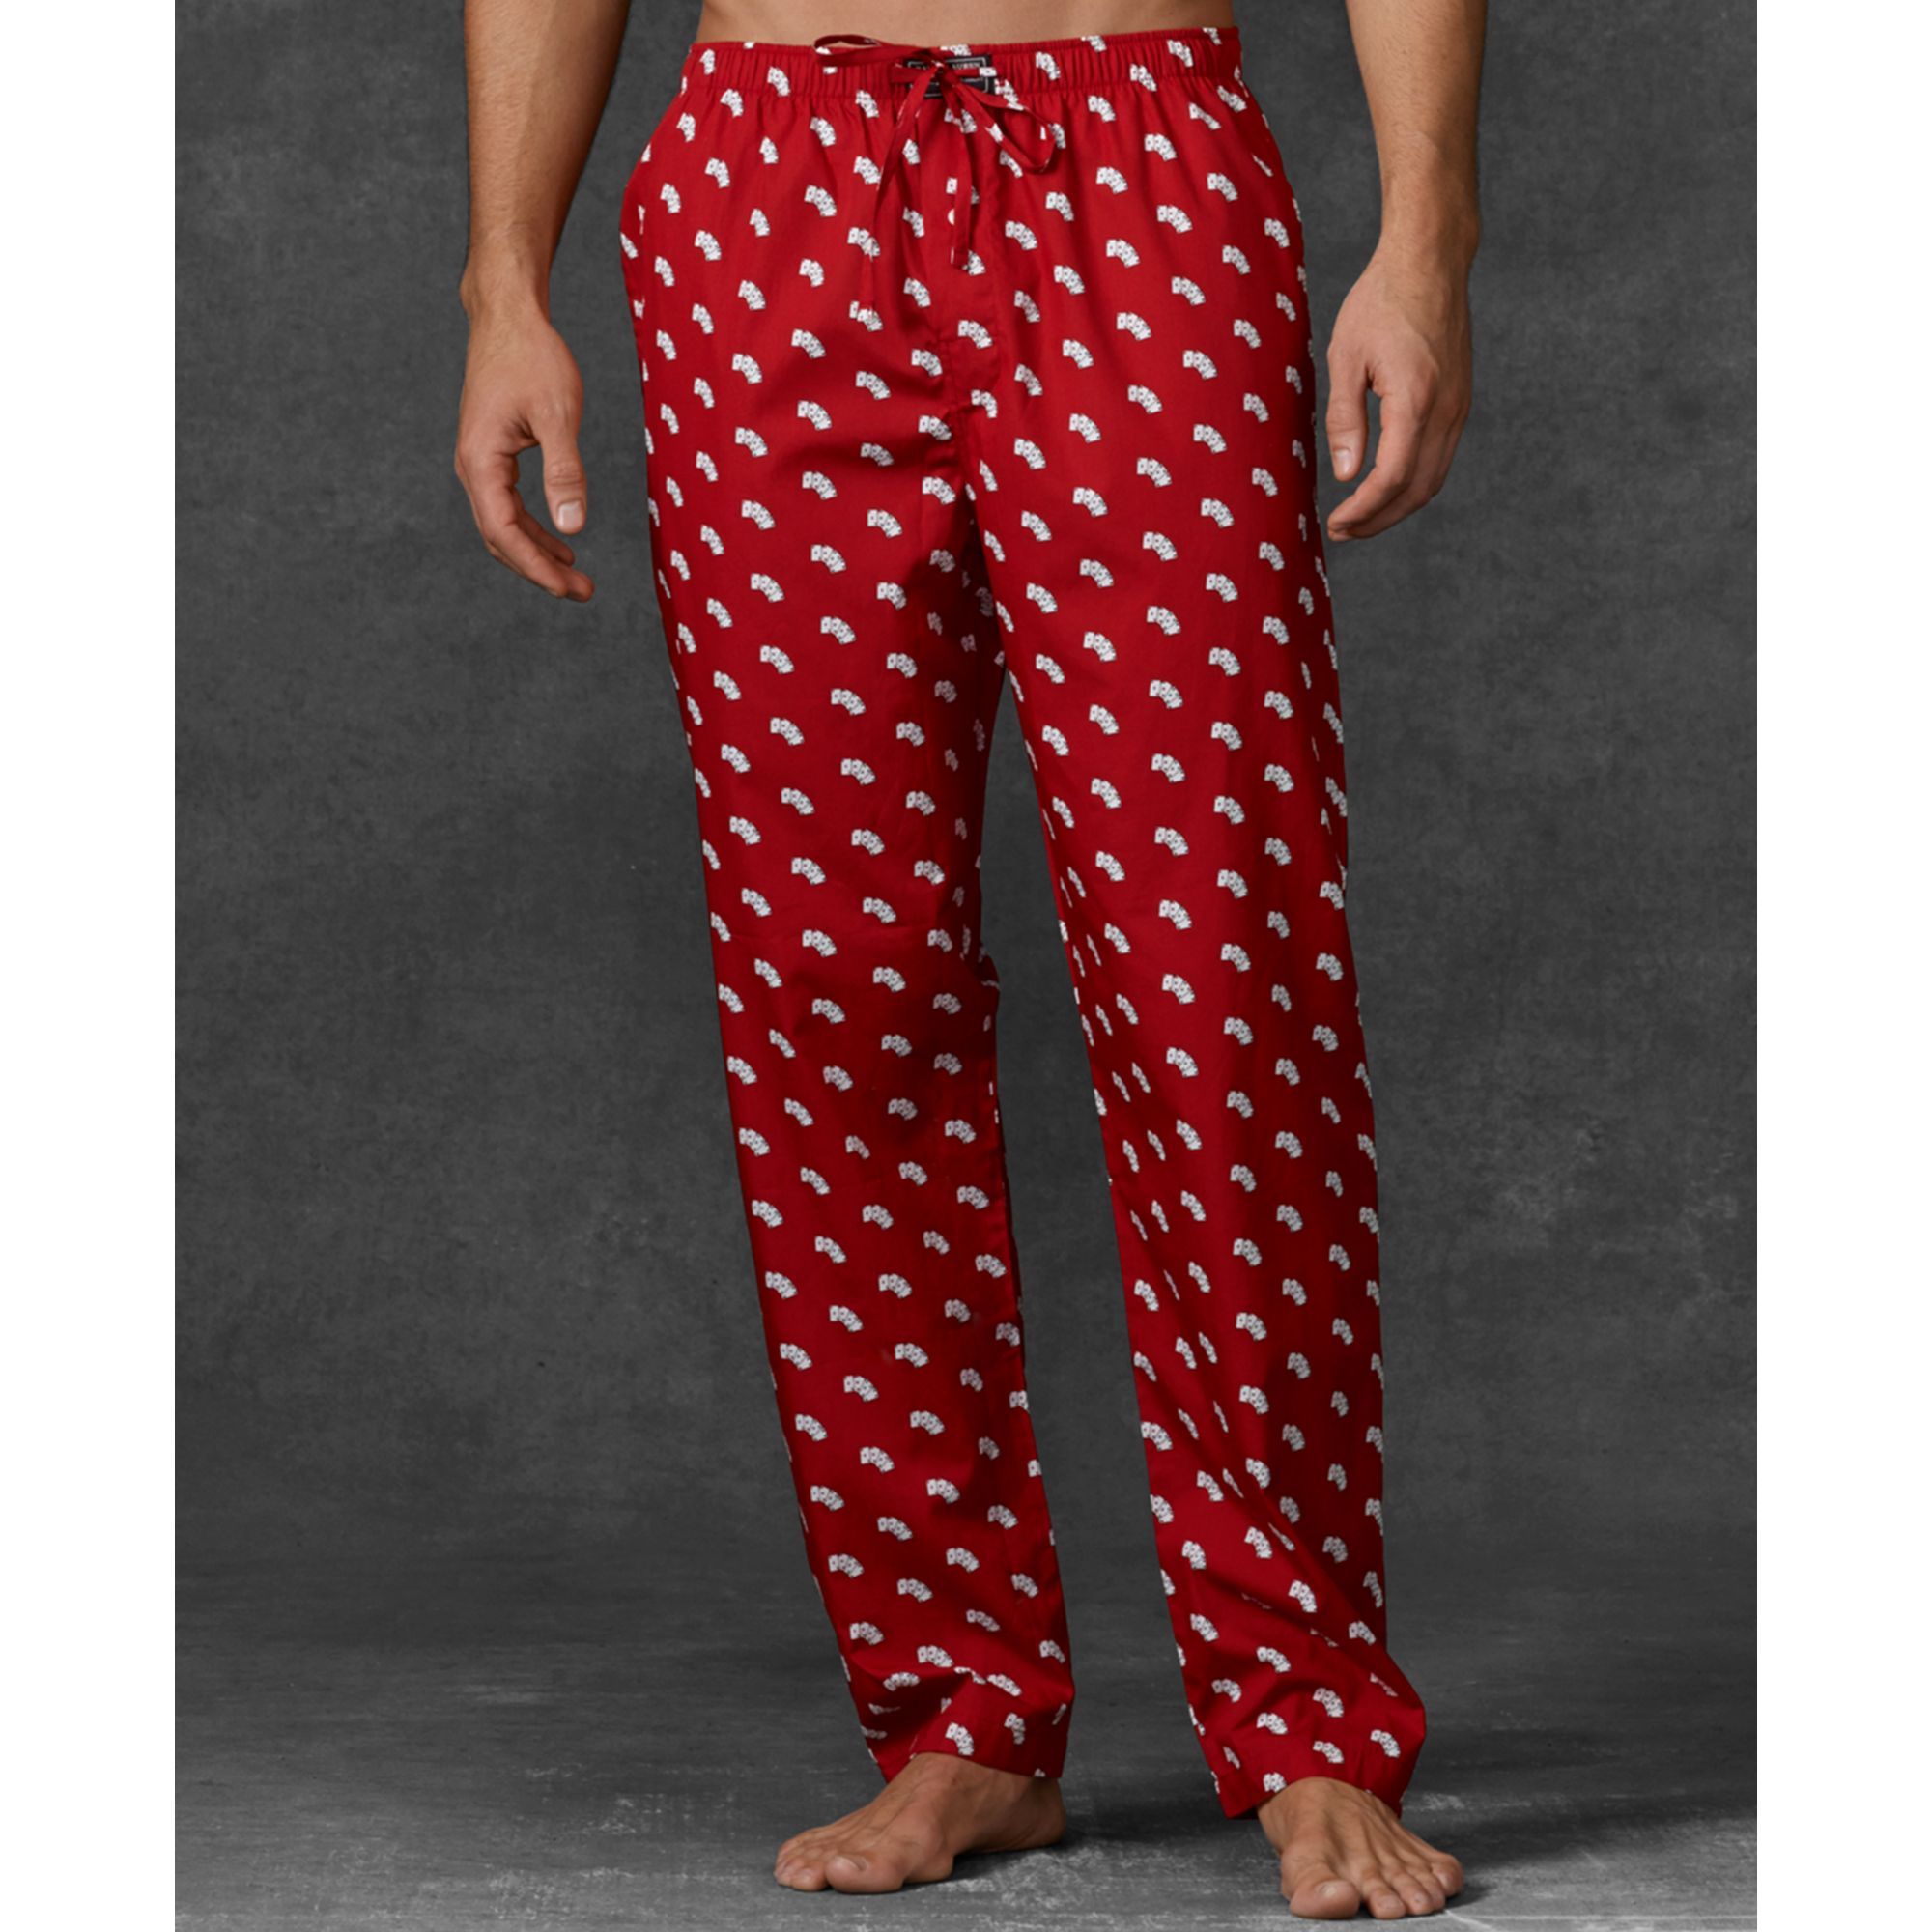 Lyst - Ralph Lauren Novelty Print Woven Pajama Pants in Red for Men